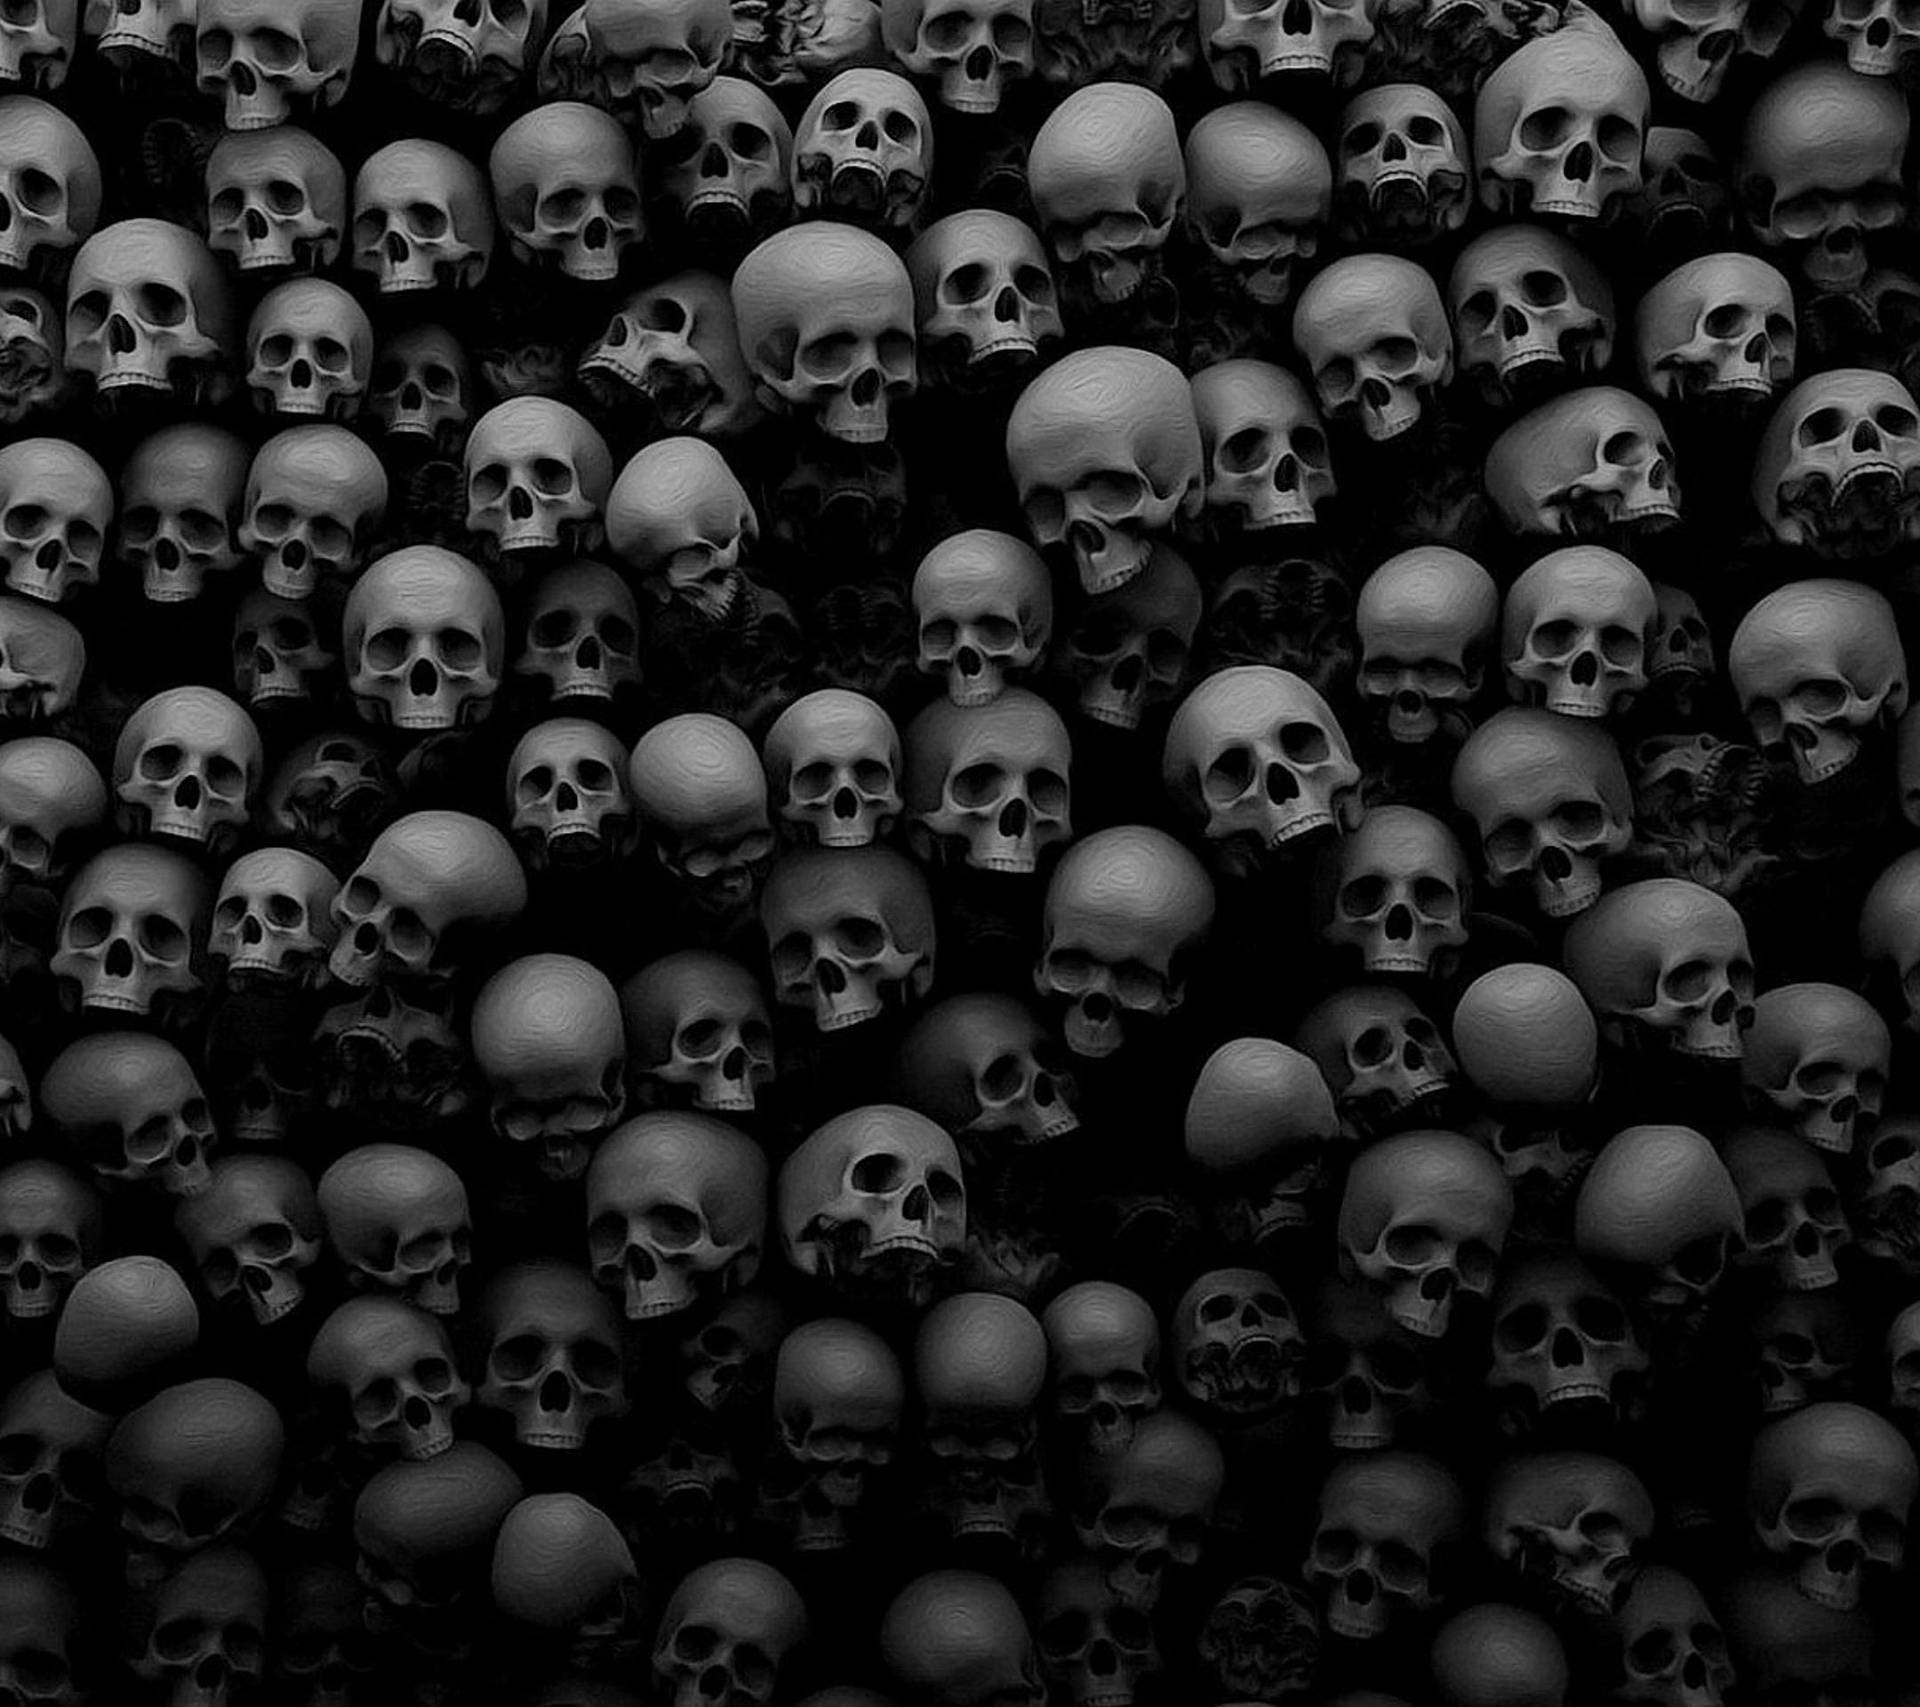 Tengkorak Wall Of Skulls Wallpaper